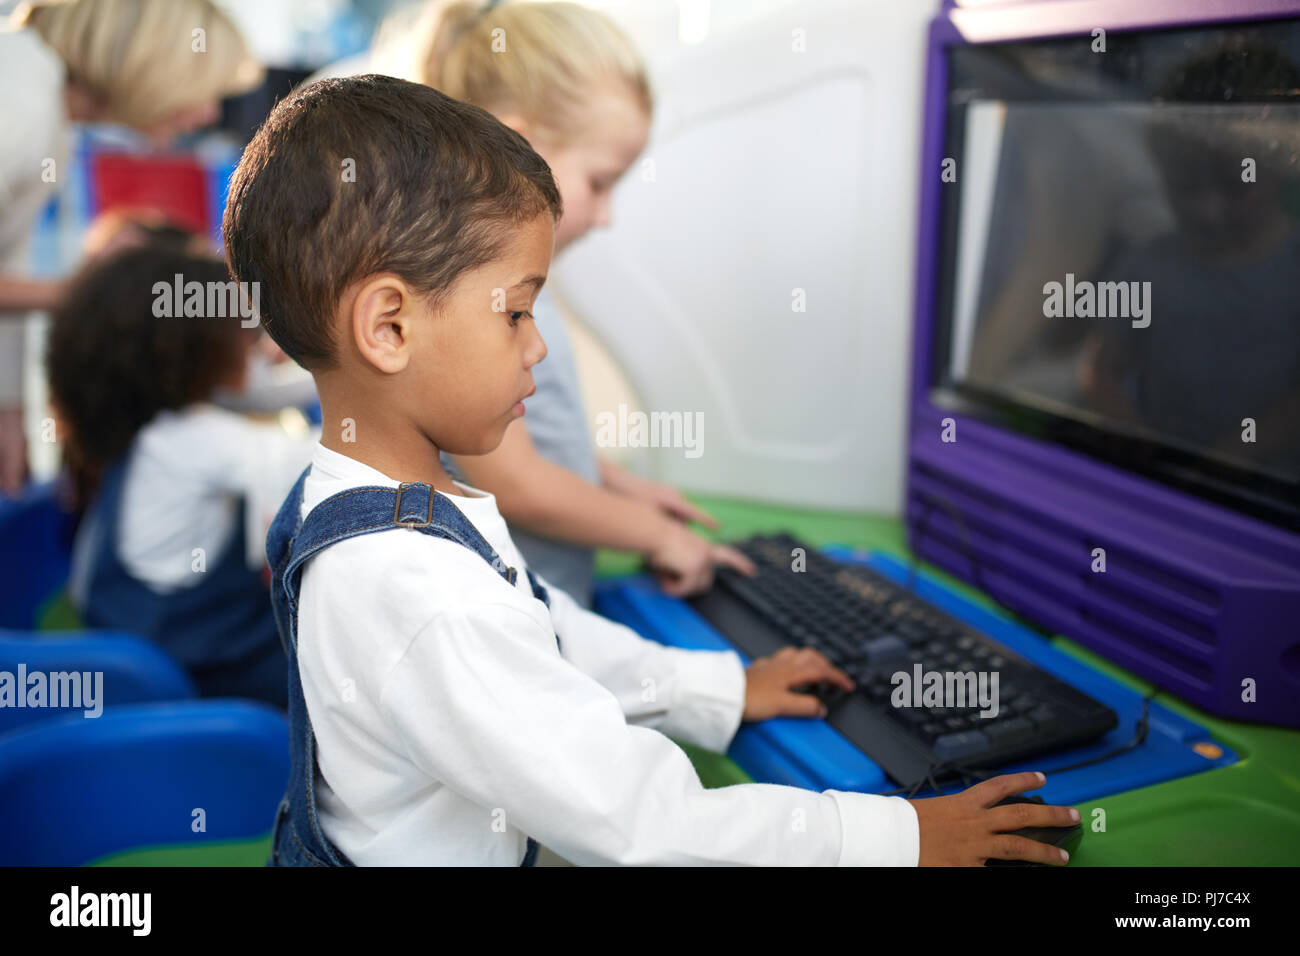 Curious boy using computer Stock Photo